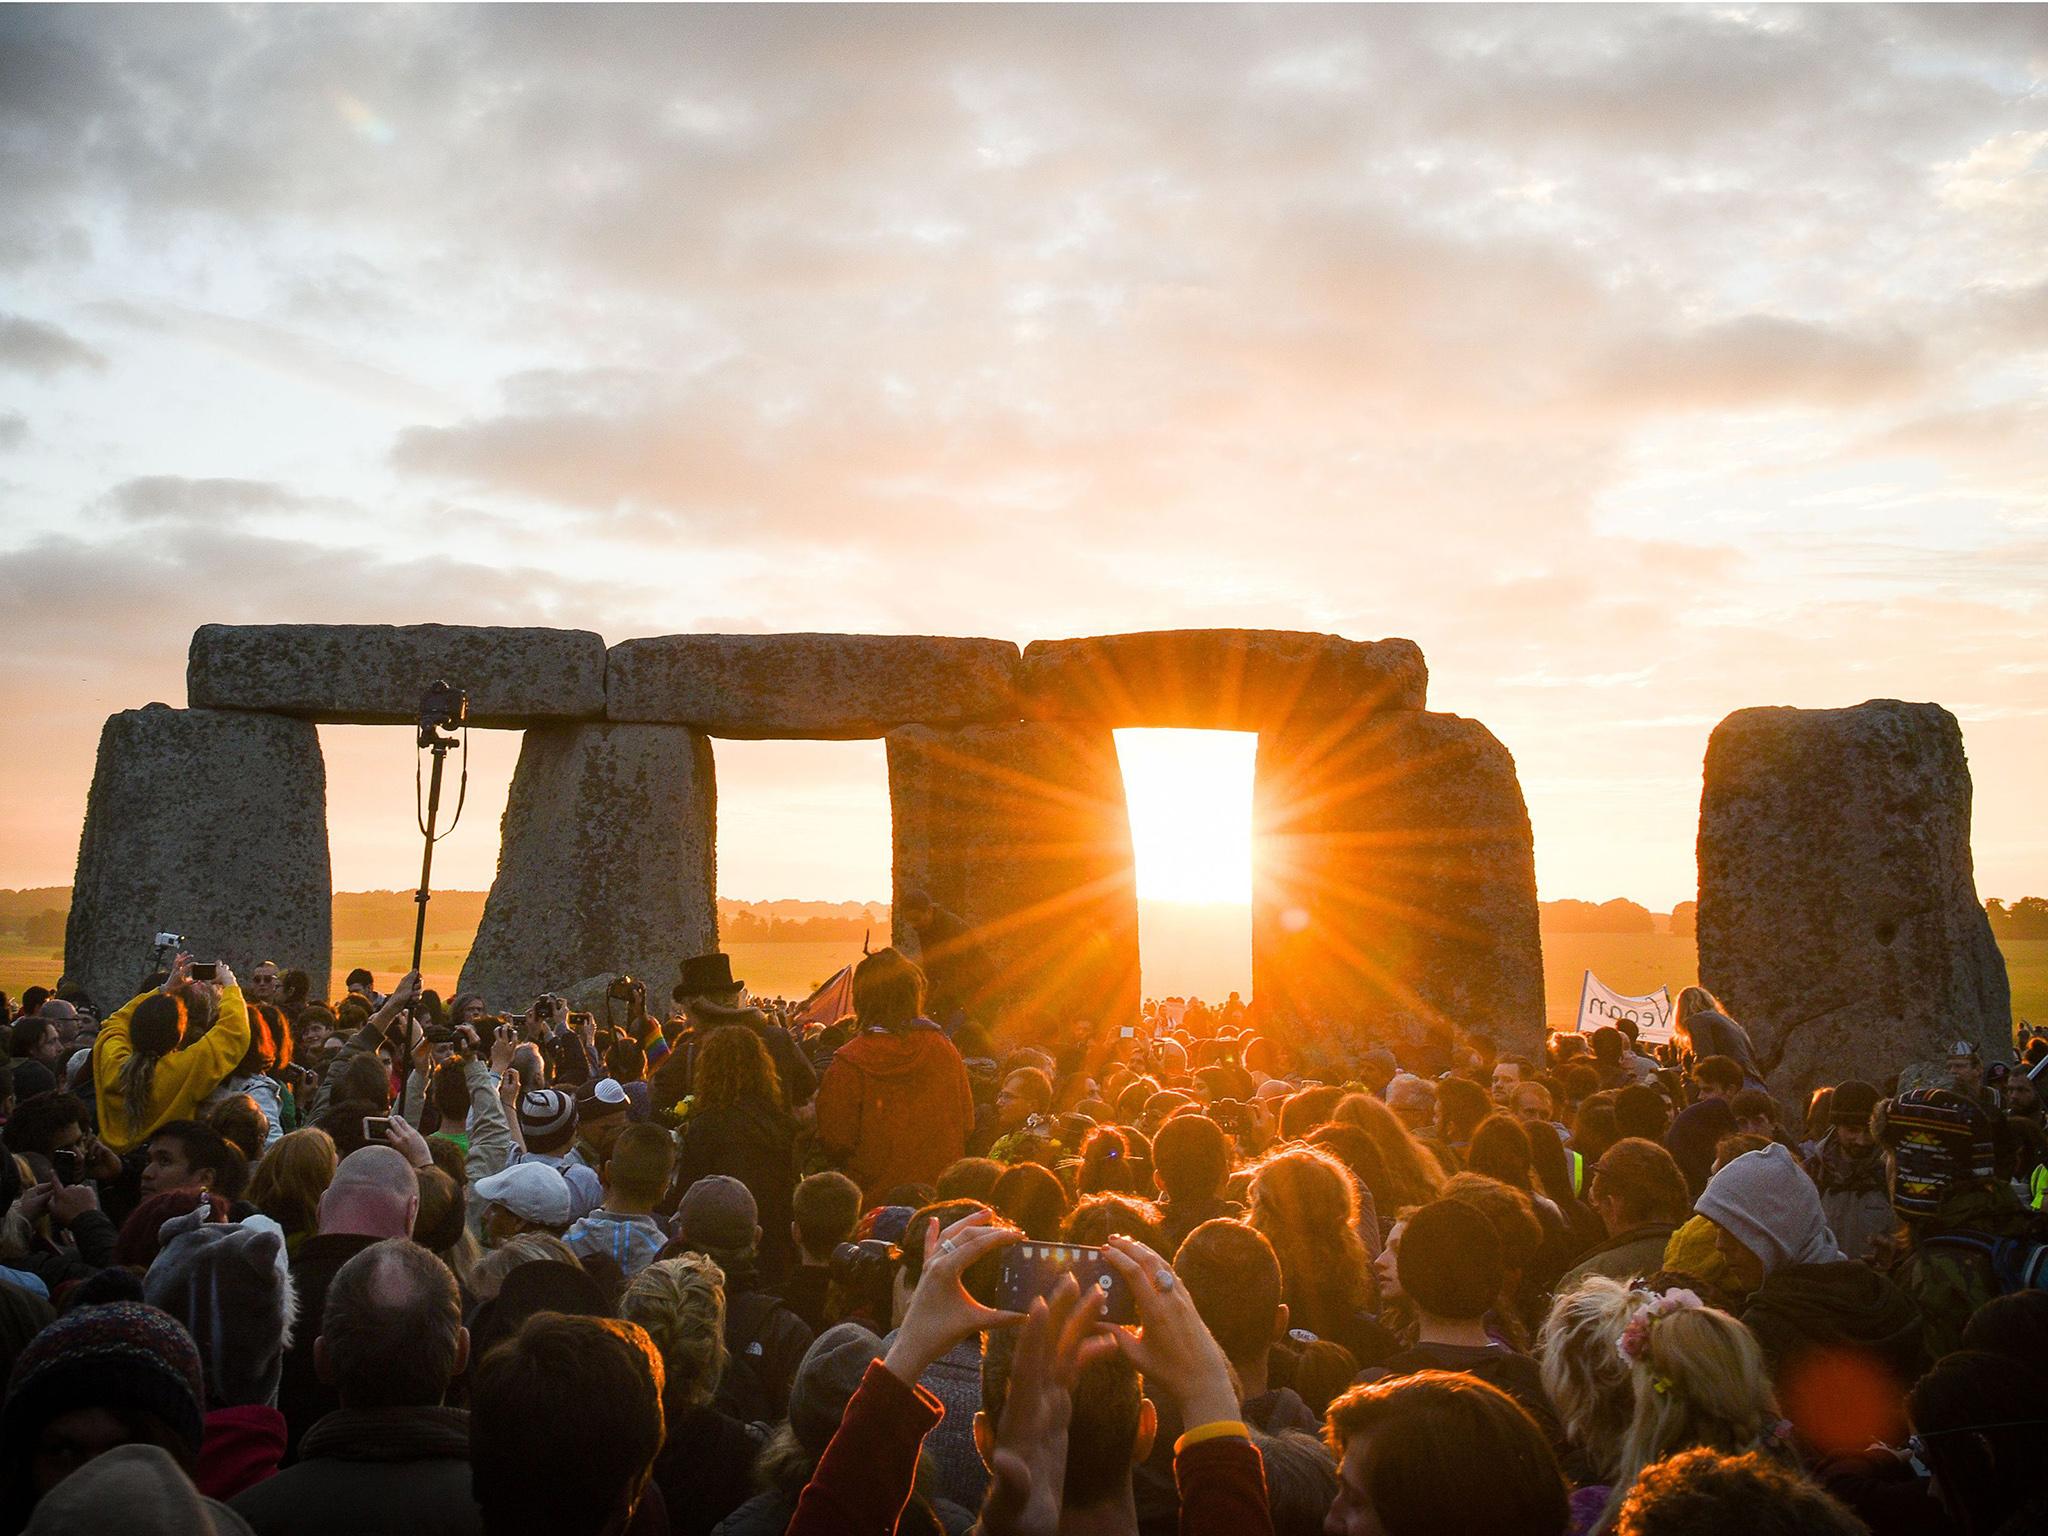 Festival yang rutin dilakukan di Stonehenge, Inggris ini merupakan perayaan terhadap summer solstice